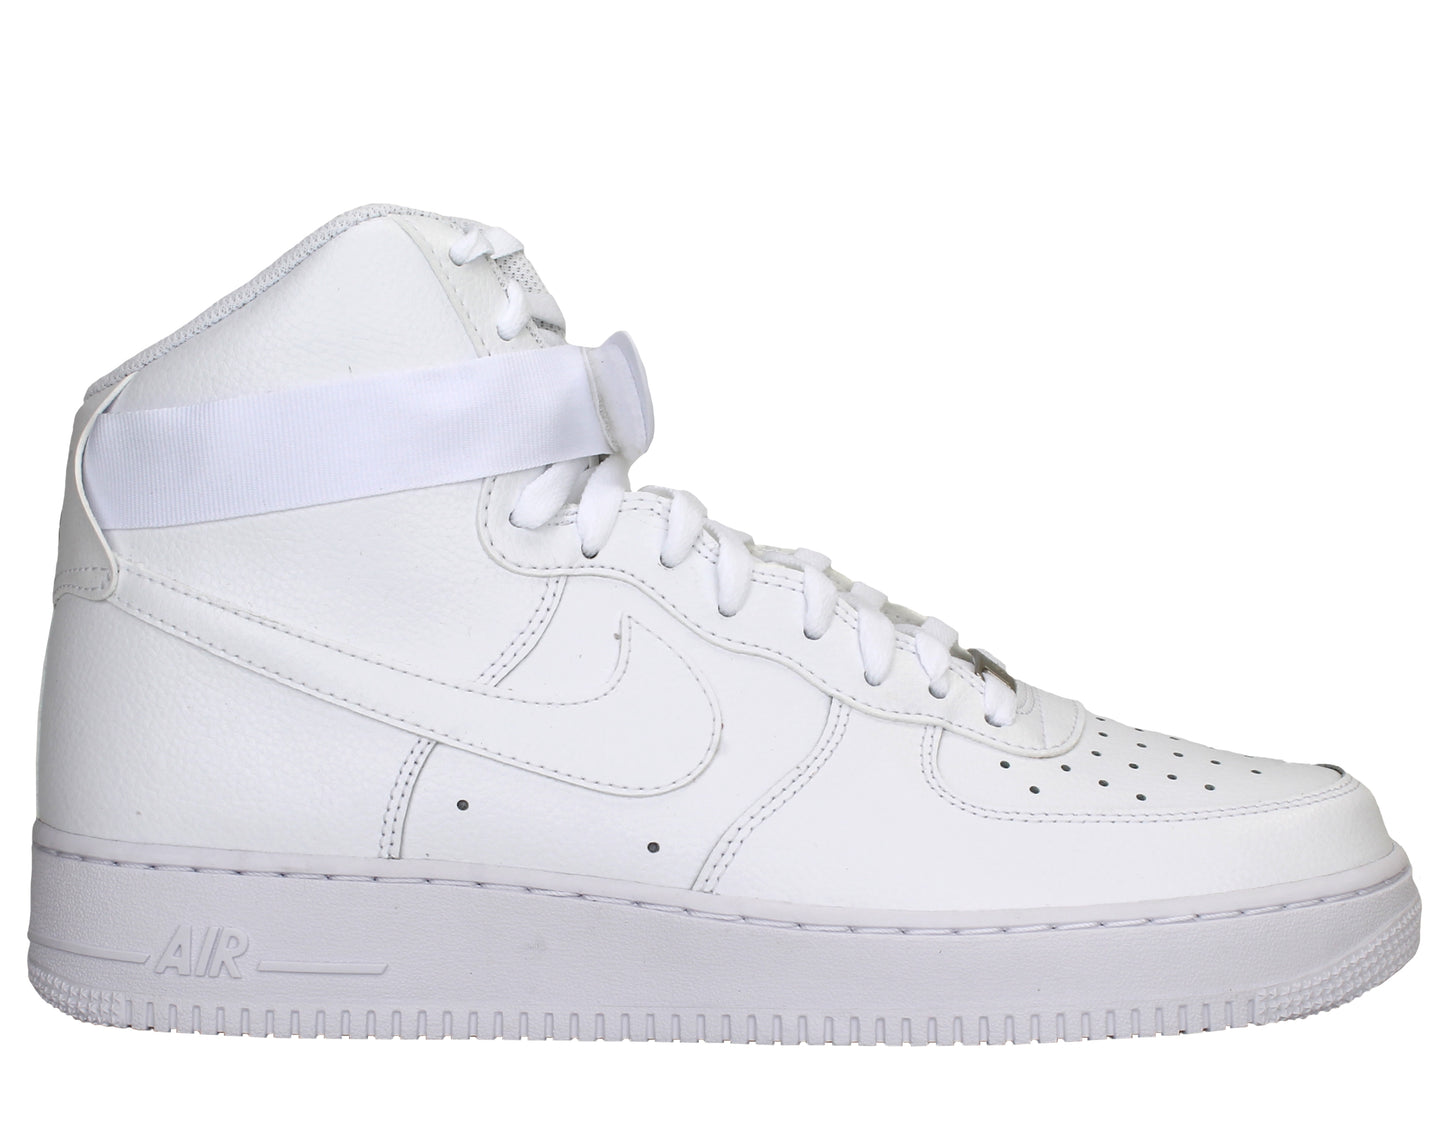 Nike Air Force 1 High '07 White/White Men's Basketball Shoes 315121-115